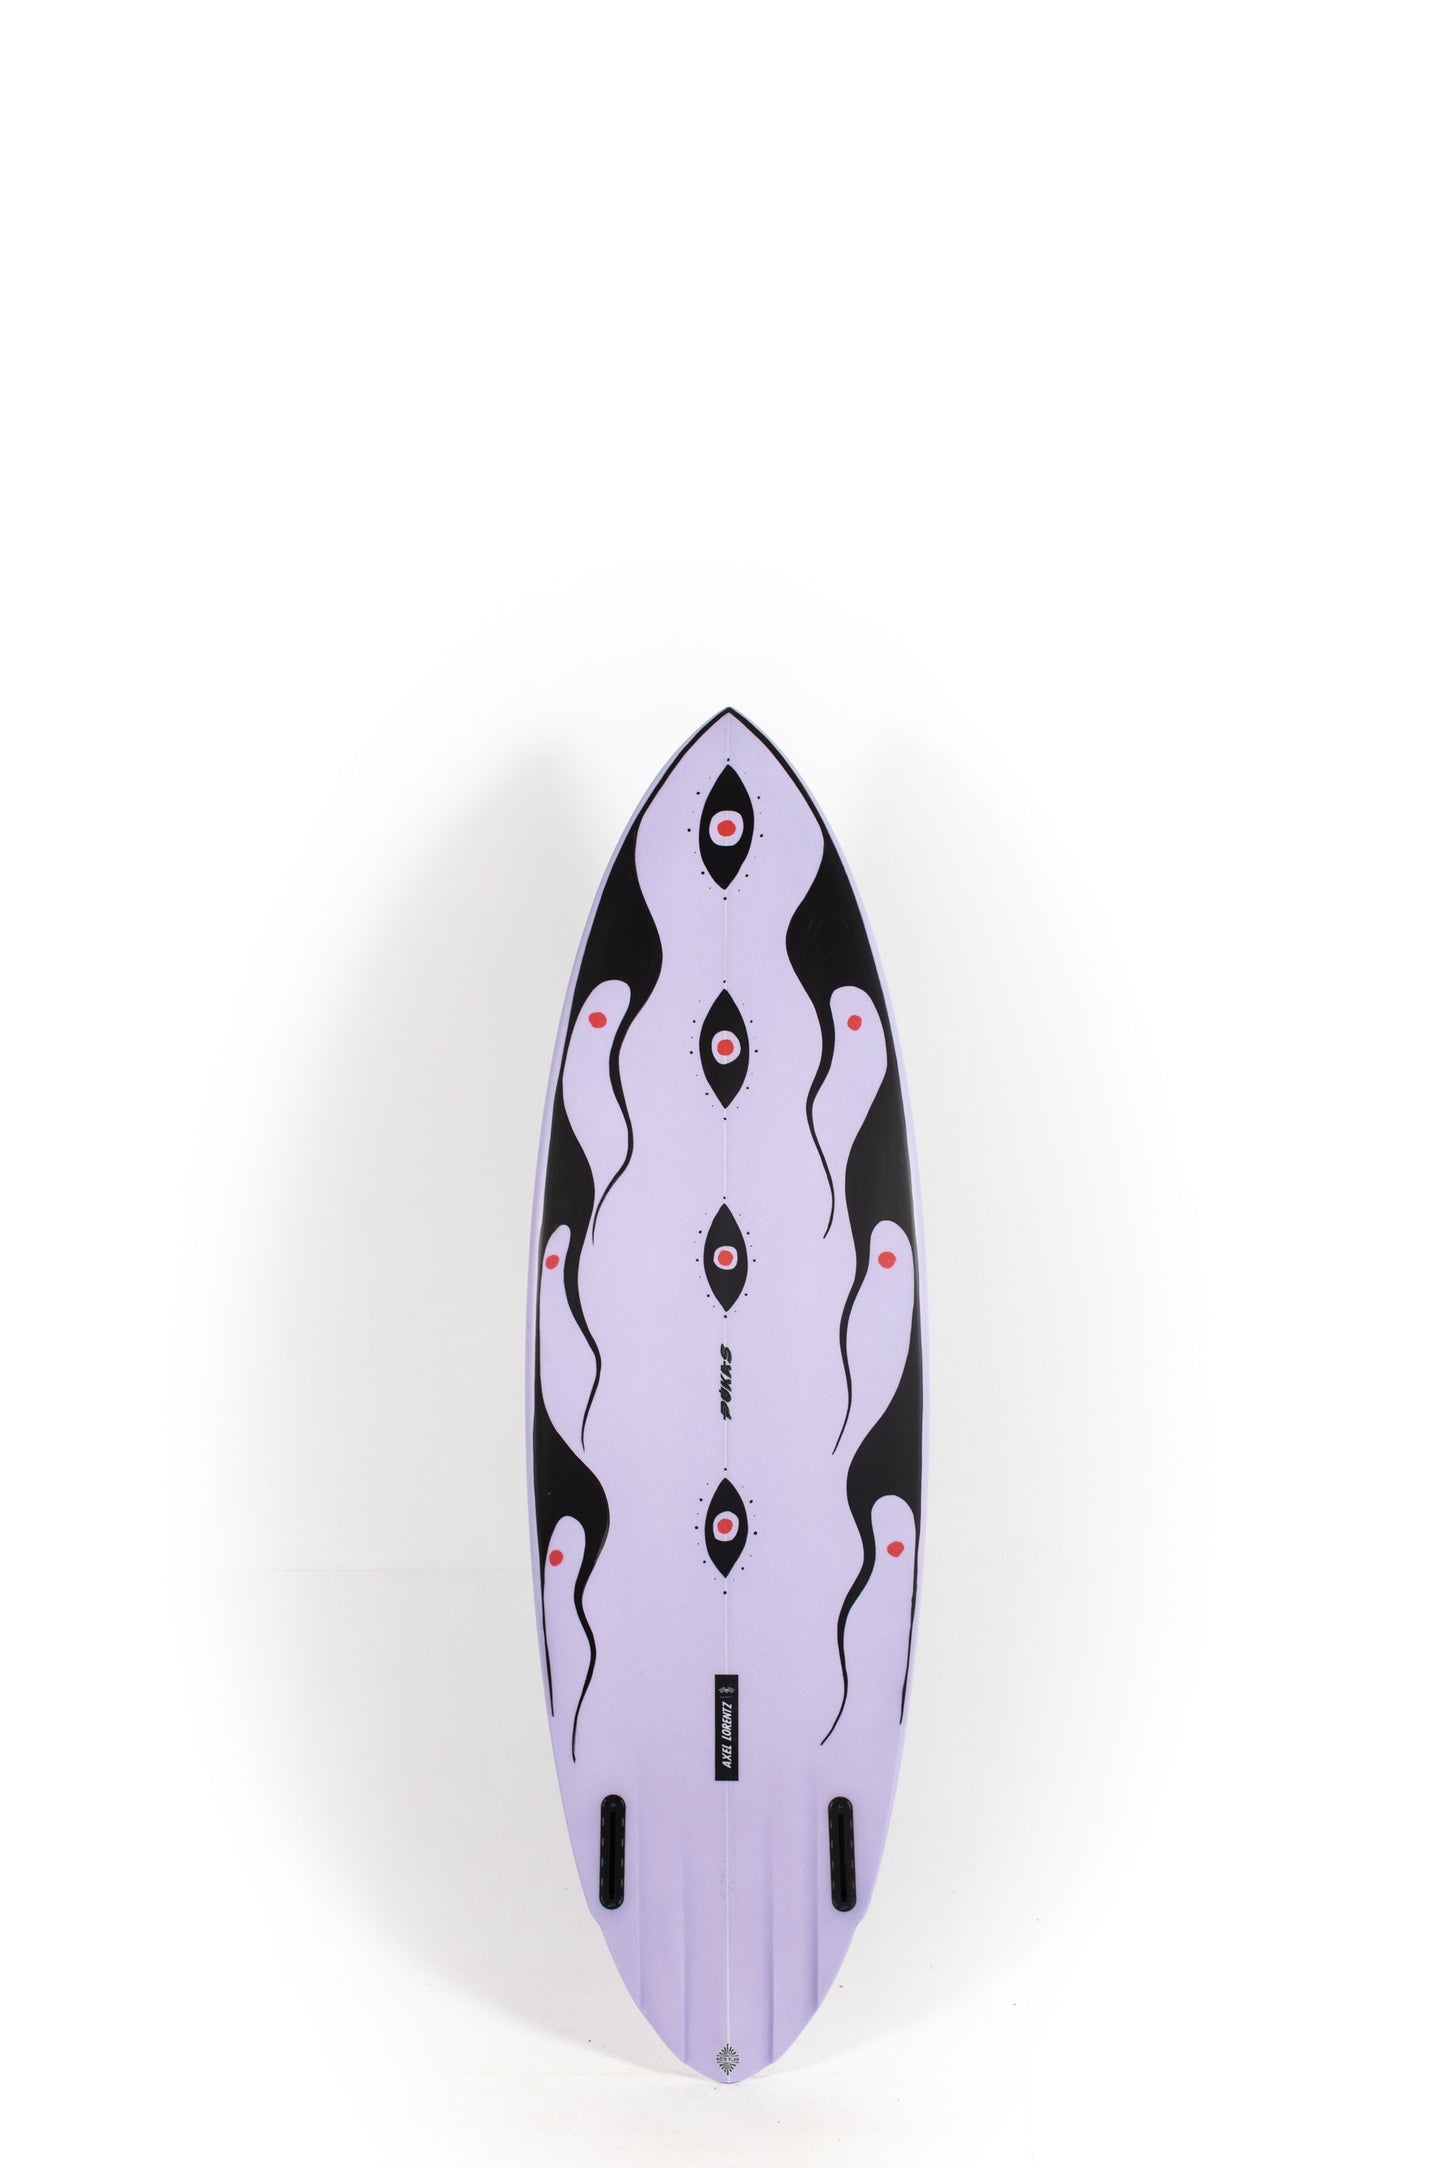 Pukas Surf Shop - Pukas Surfboards - ACID PLAN by Axel Lorentz -  5'11" x 20,5 x 2,55 x 33,9L - AX08666